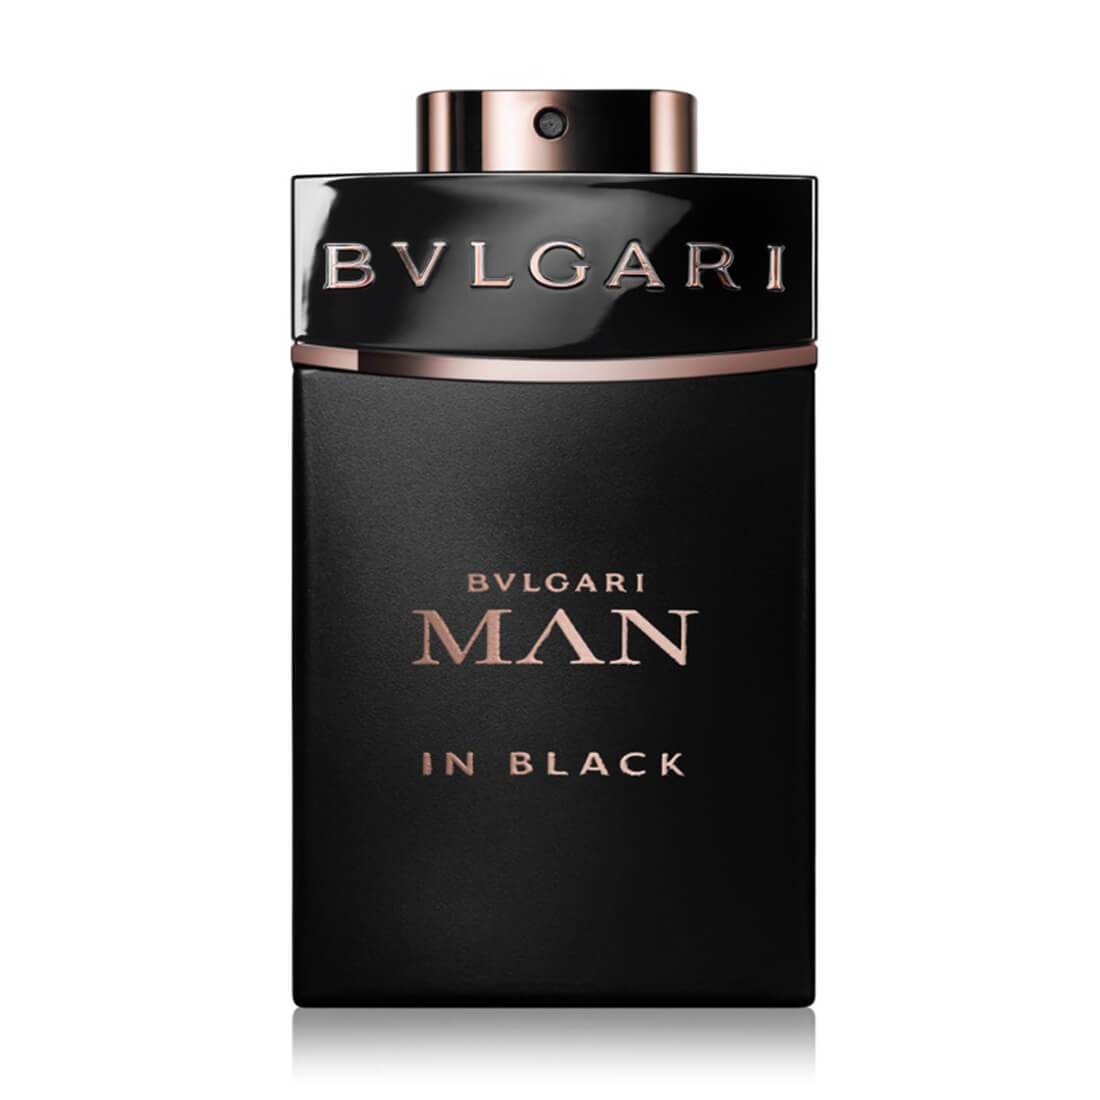 Bvlgari Man in Black EDP Perfume For Men - 100ml